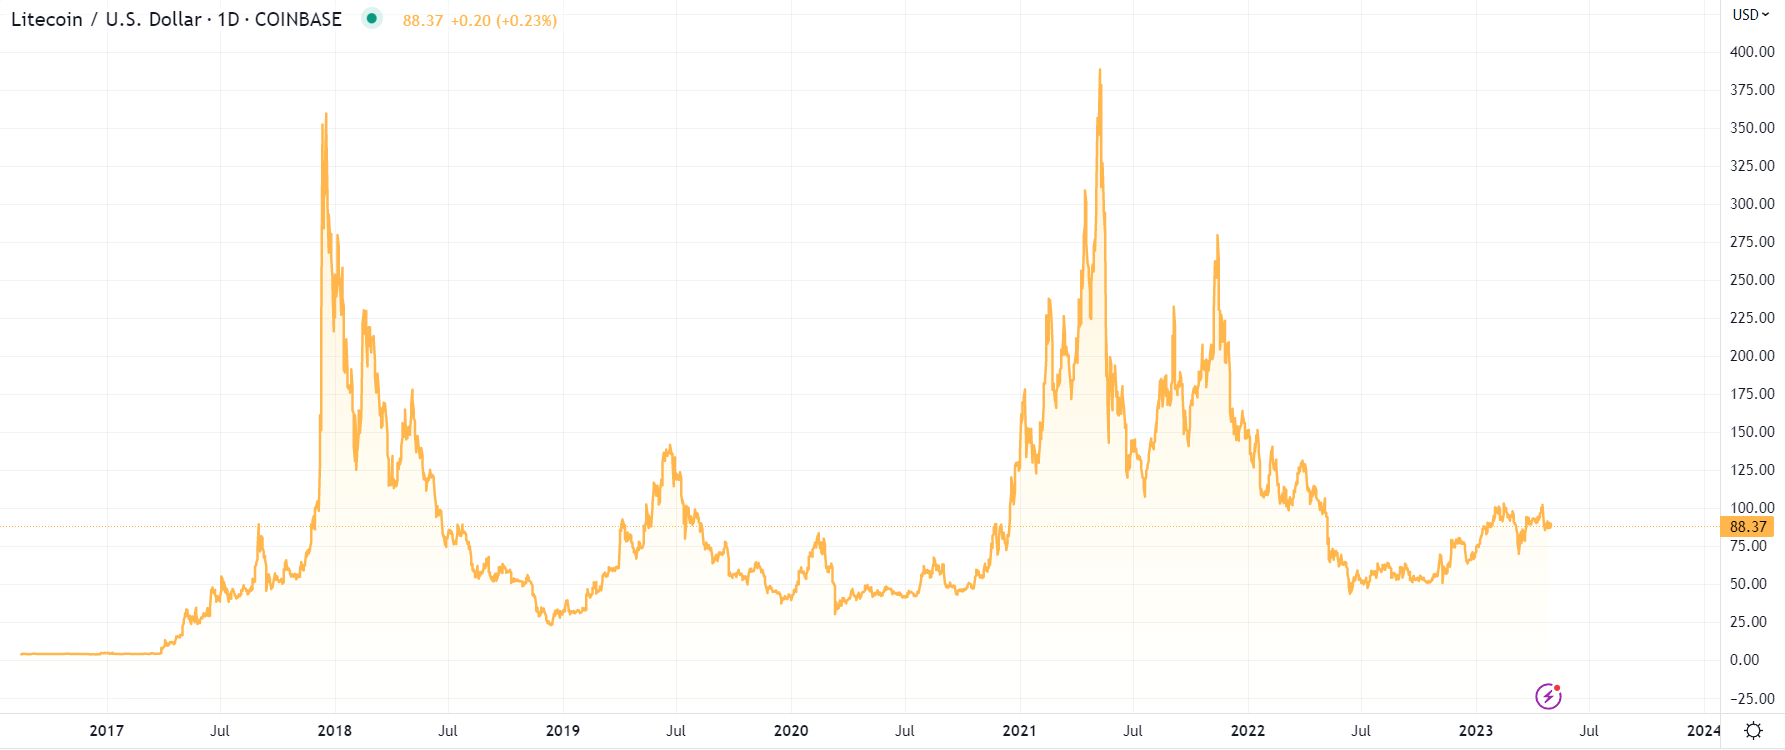 Litecoin USD (LTC-USD) Price, Value, News & History - Yahoo Finance